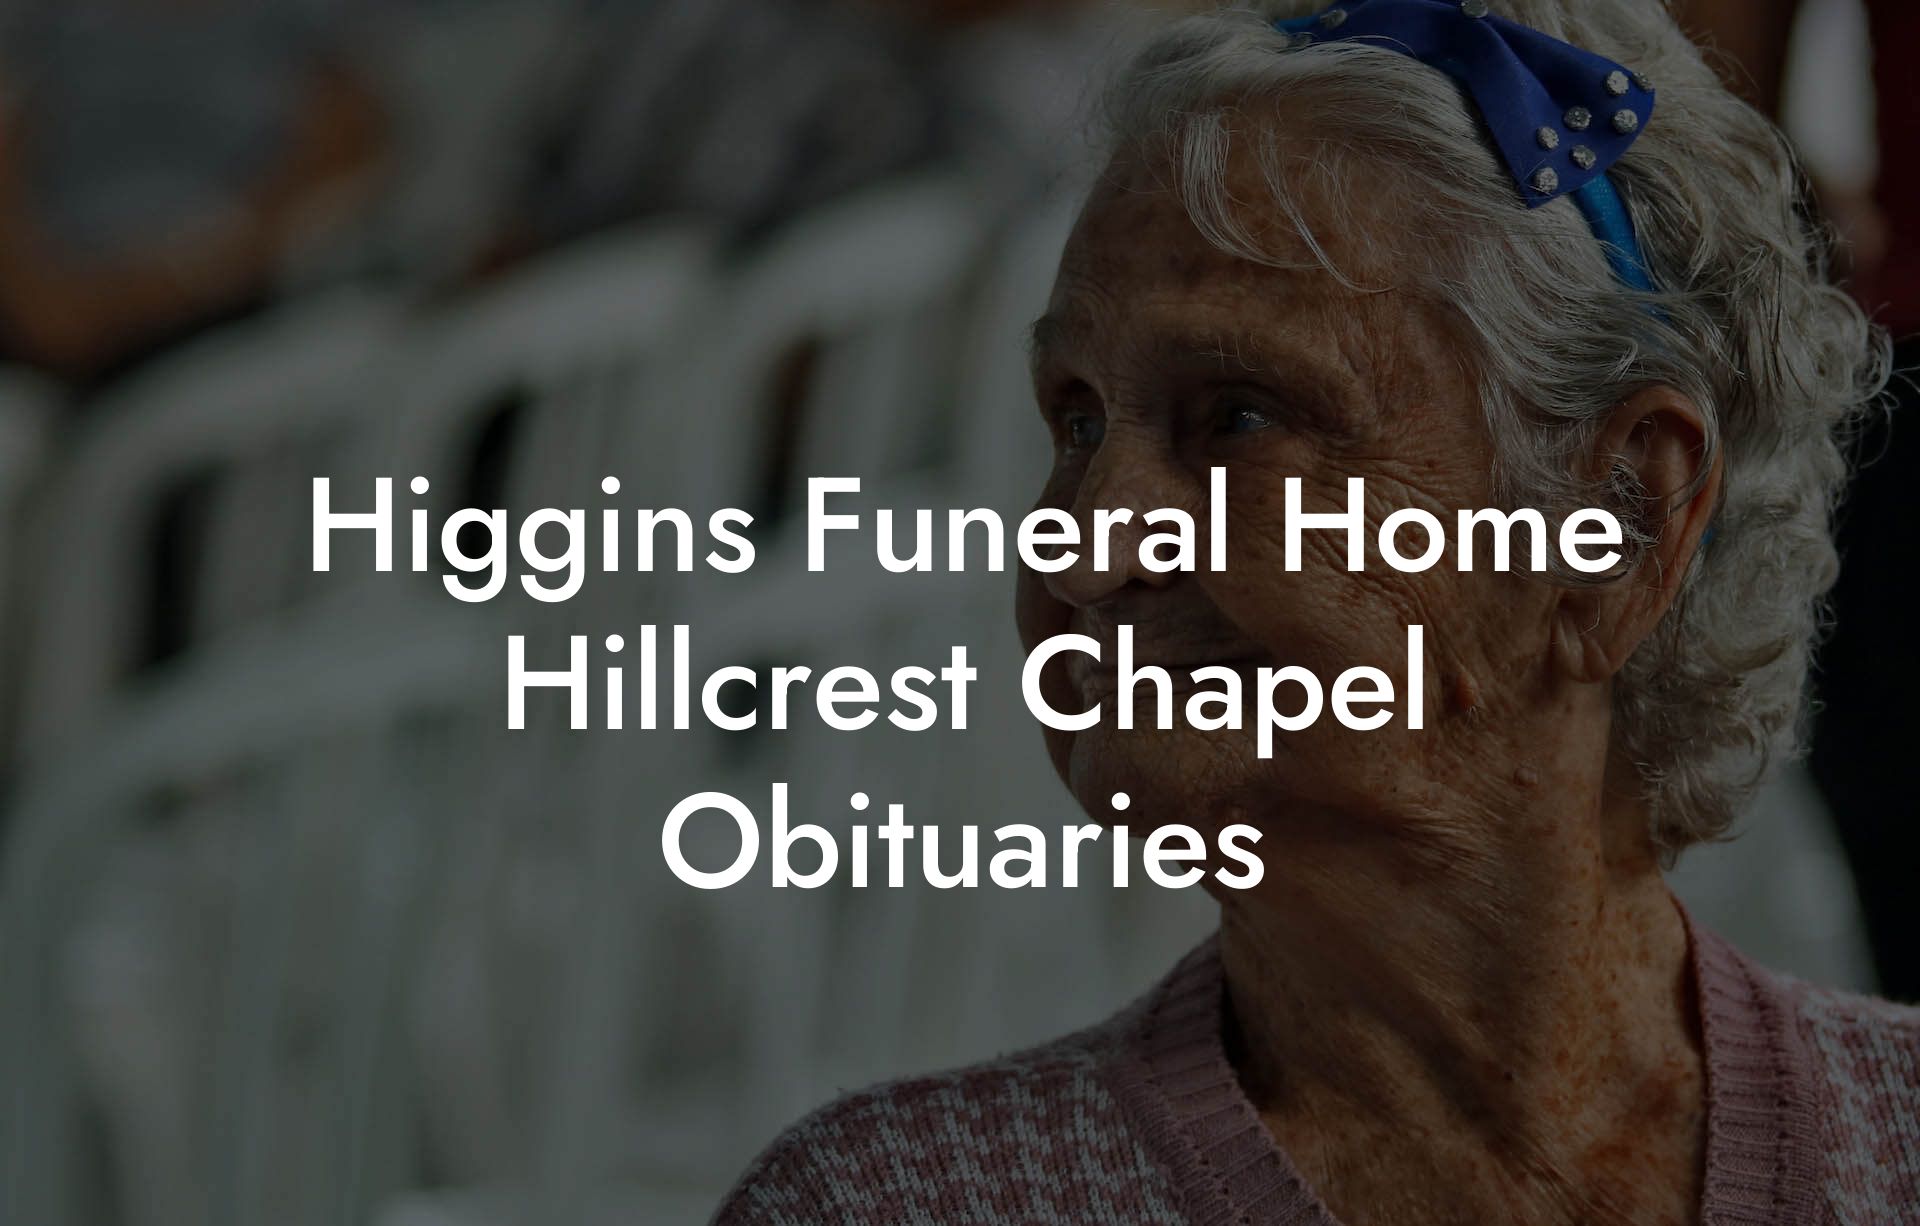 Higgins Funeral Home Hillcrest Chapel Obituaries - Eulogy Assistant